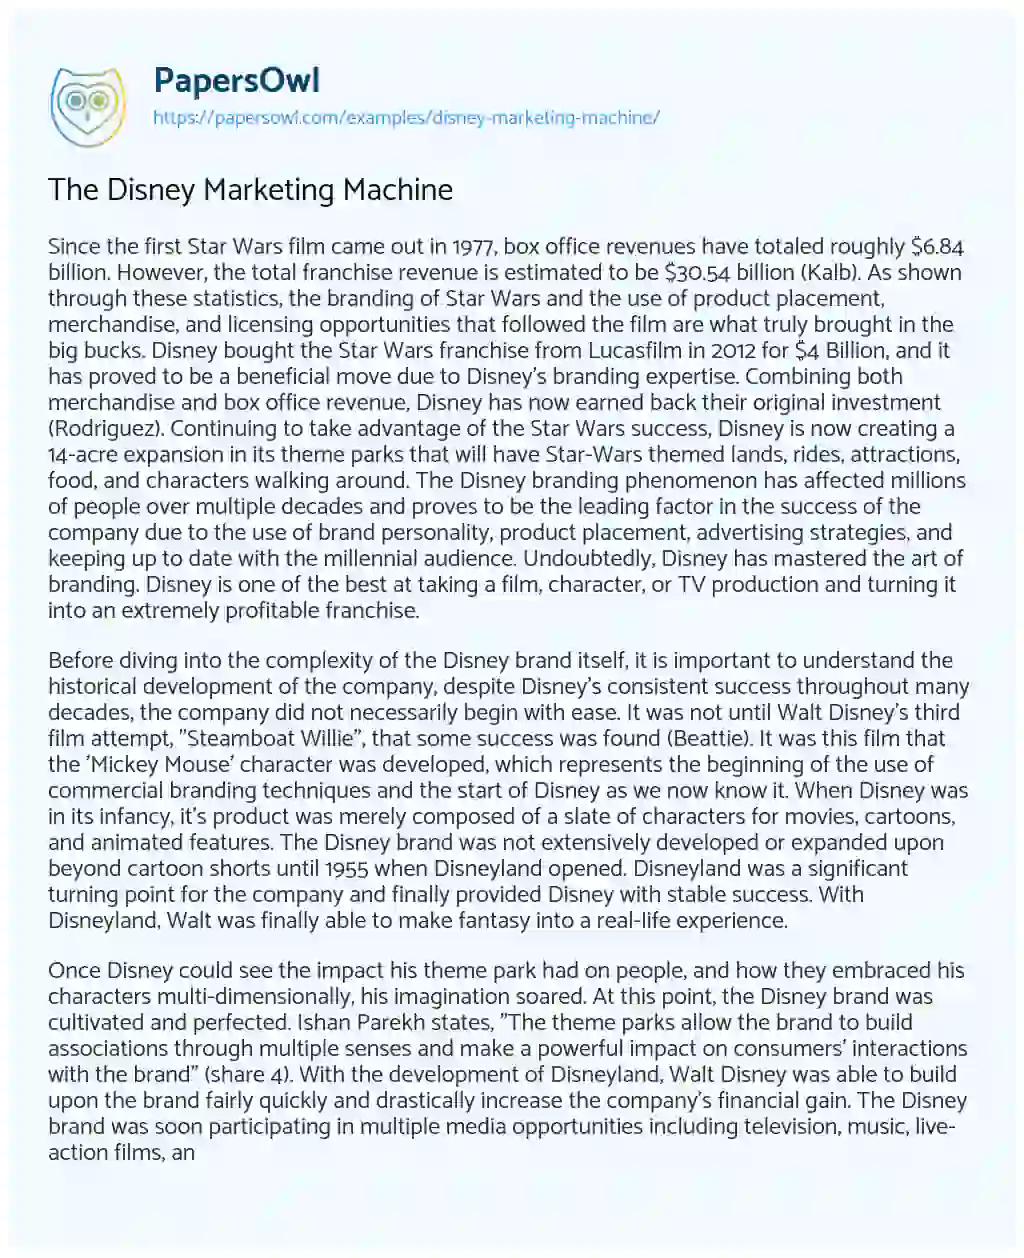 Essay on The Disney Marketing Machine